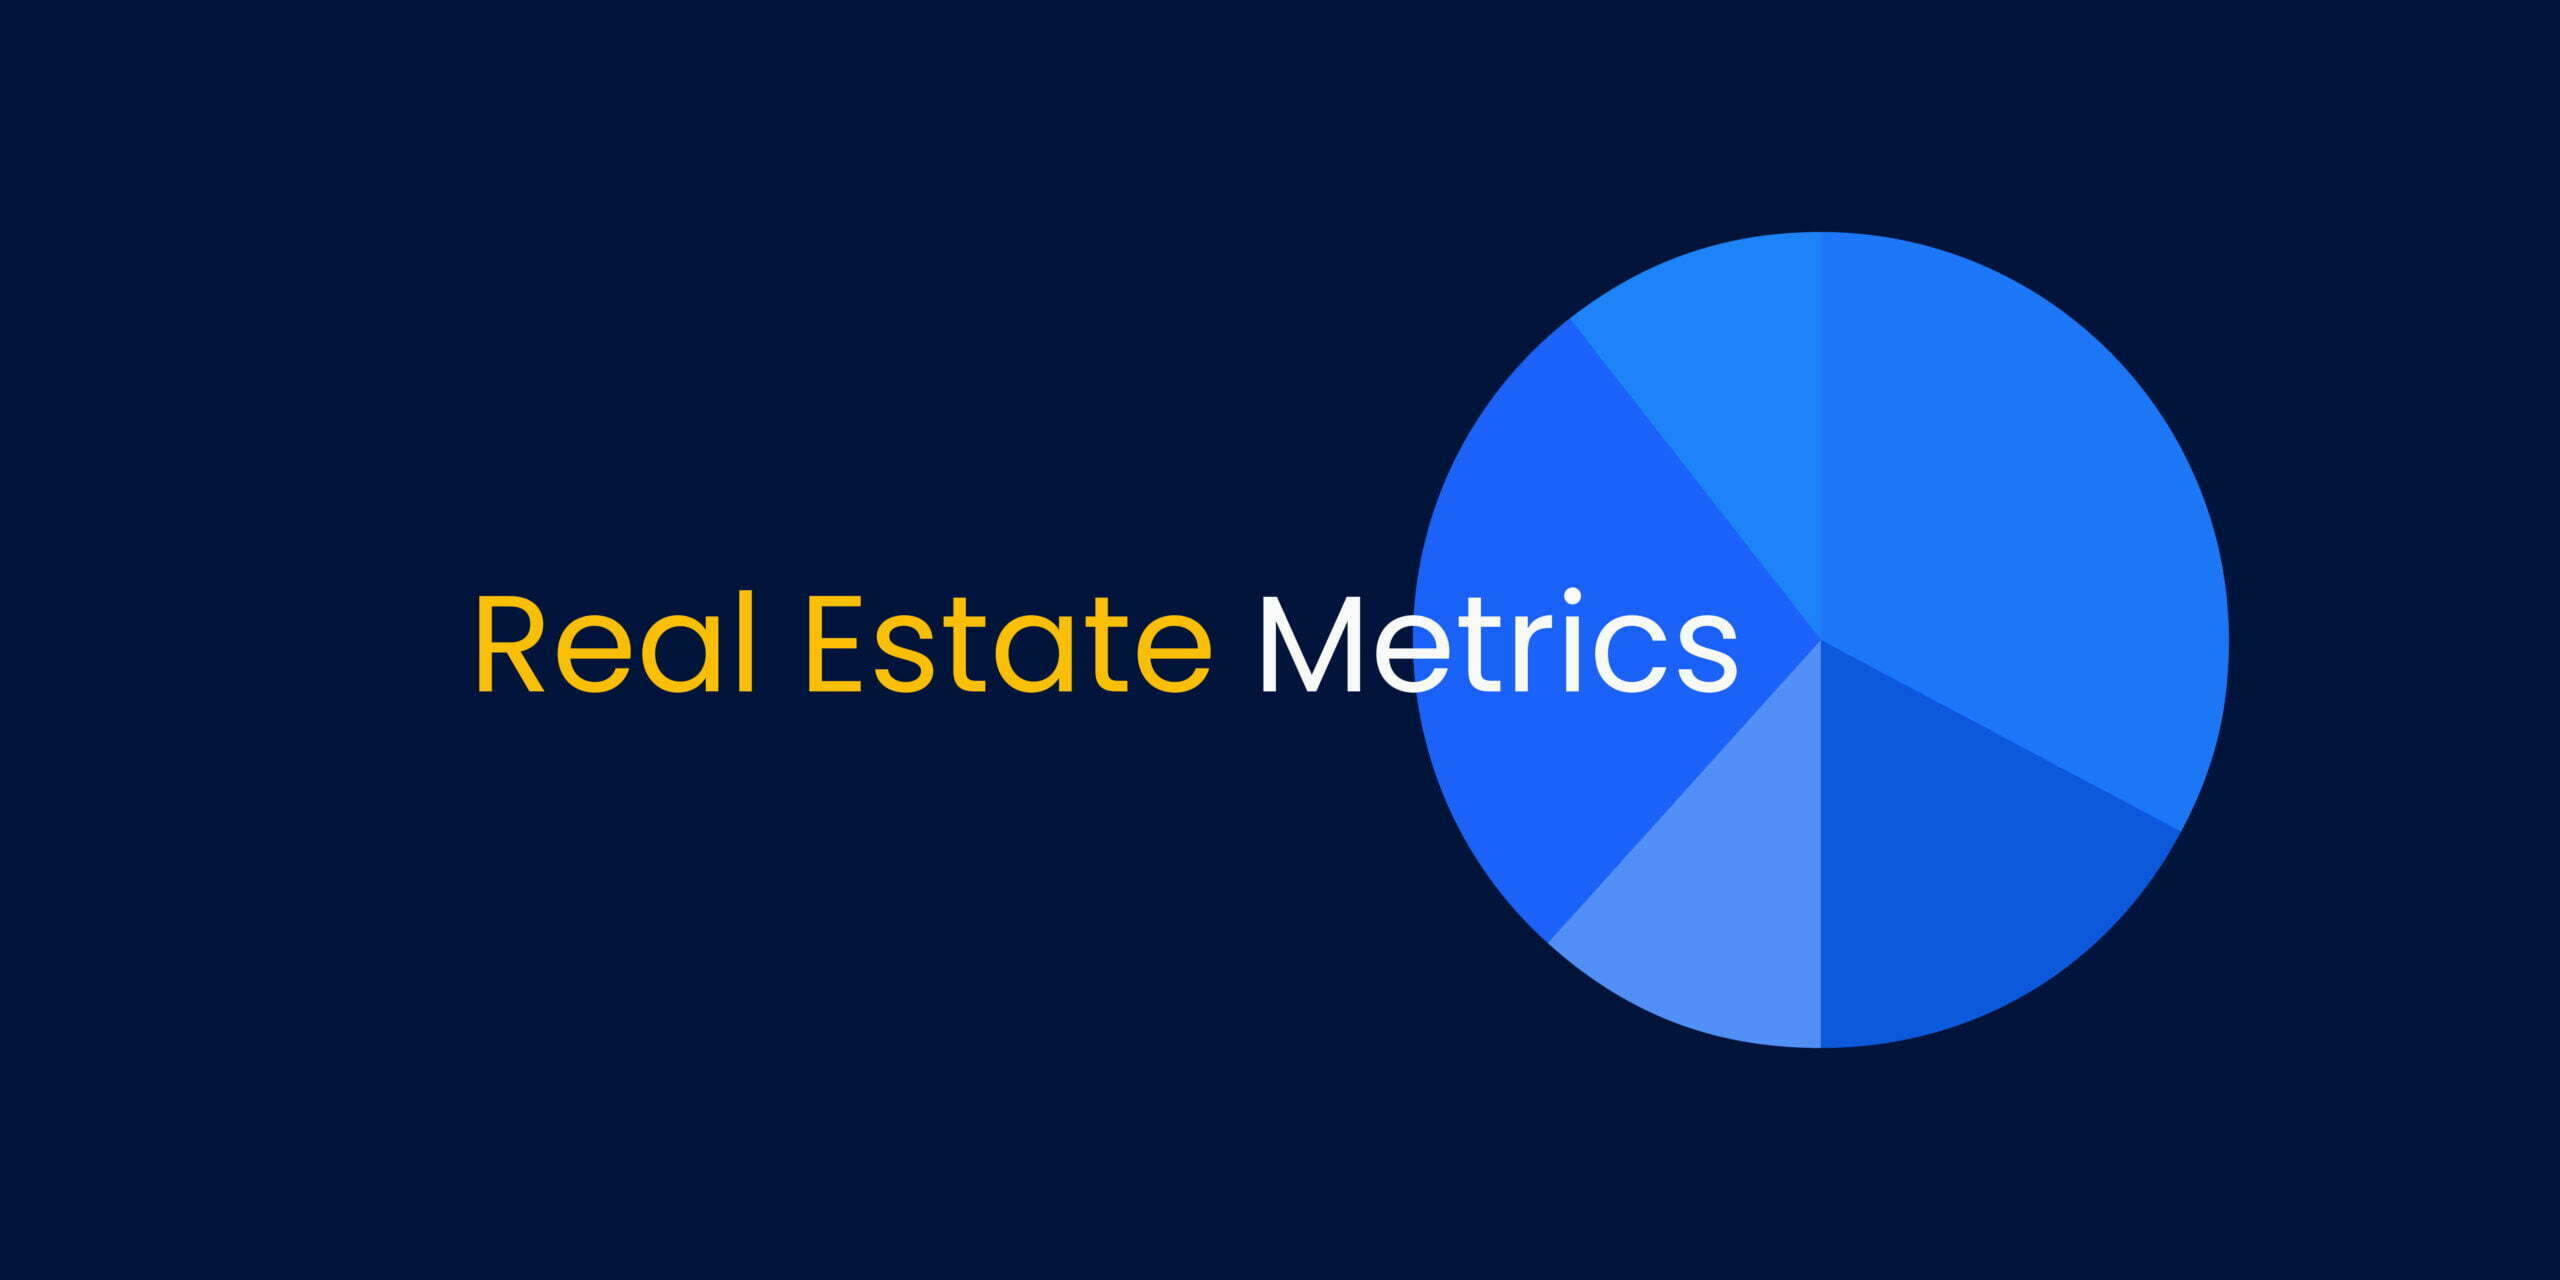 Real Estate Metrics Explained